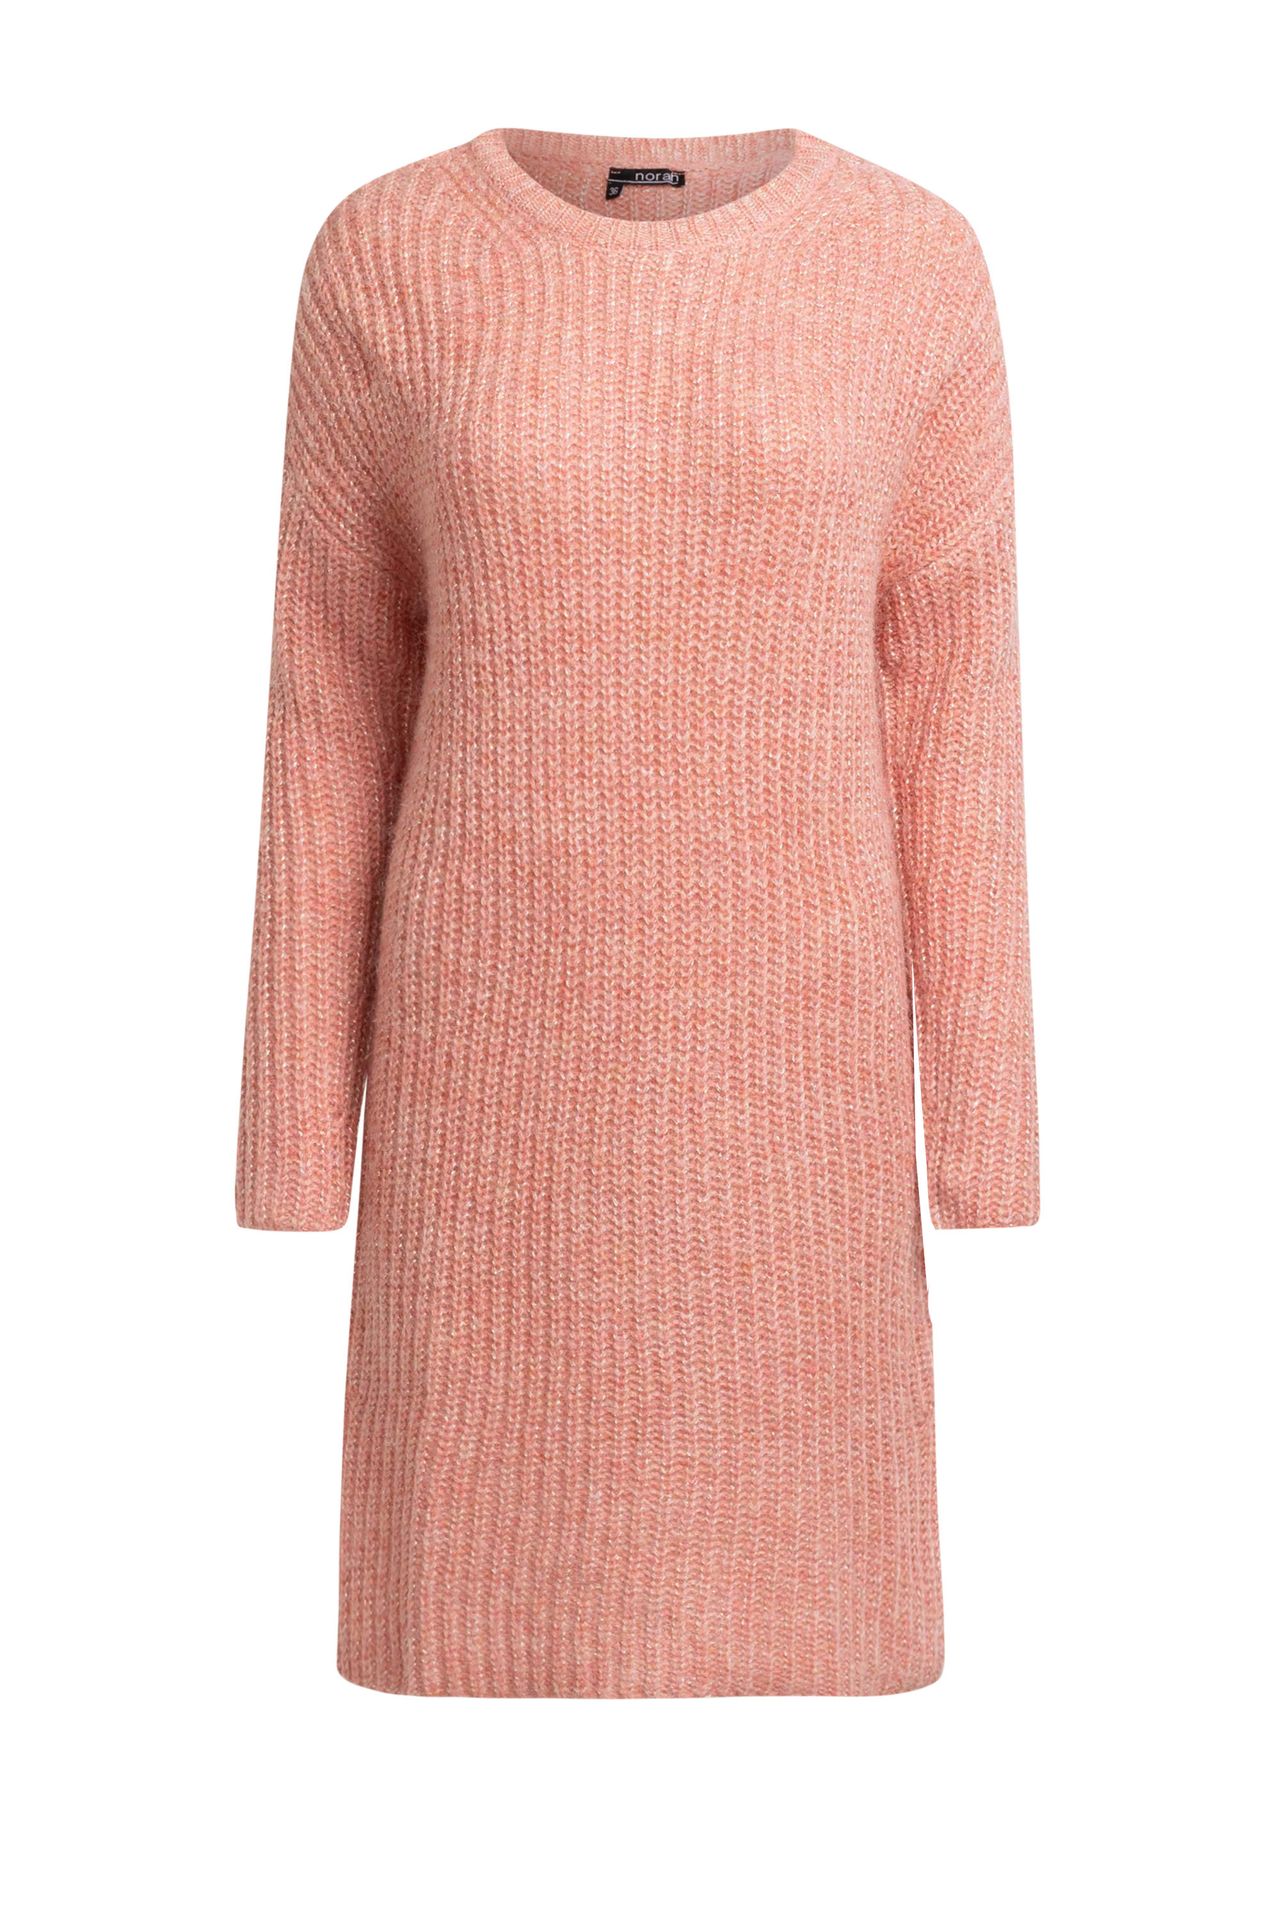  Gebreide jurk roze blush 210585-905-44